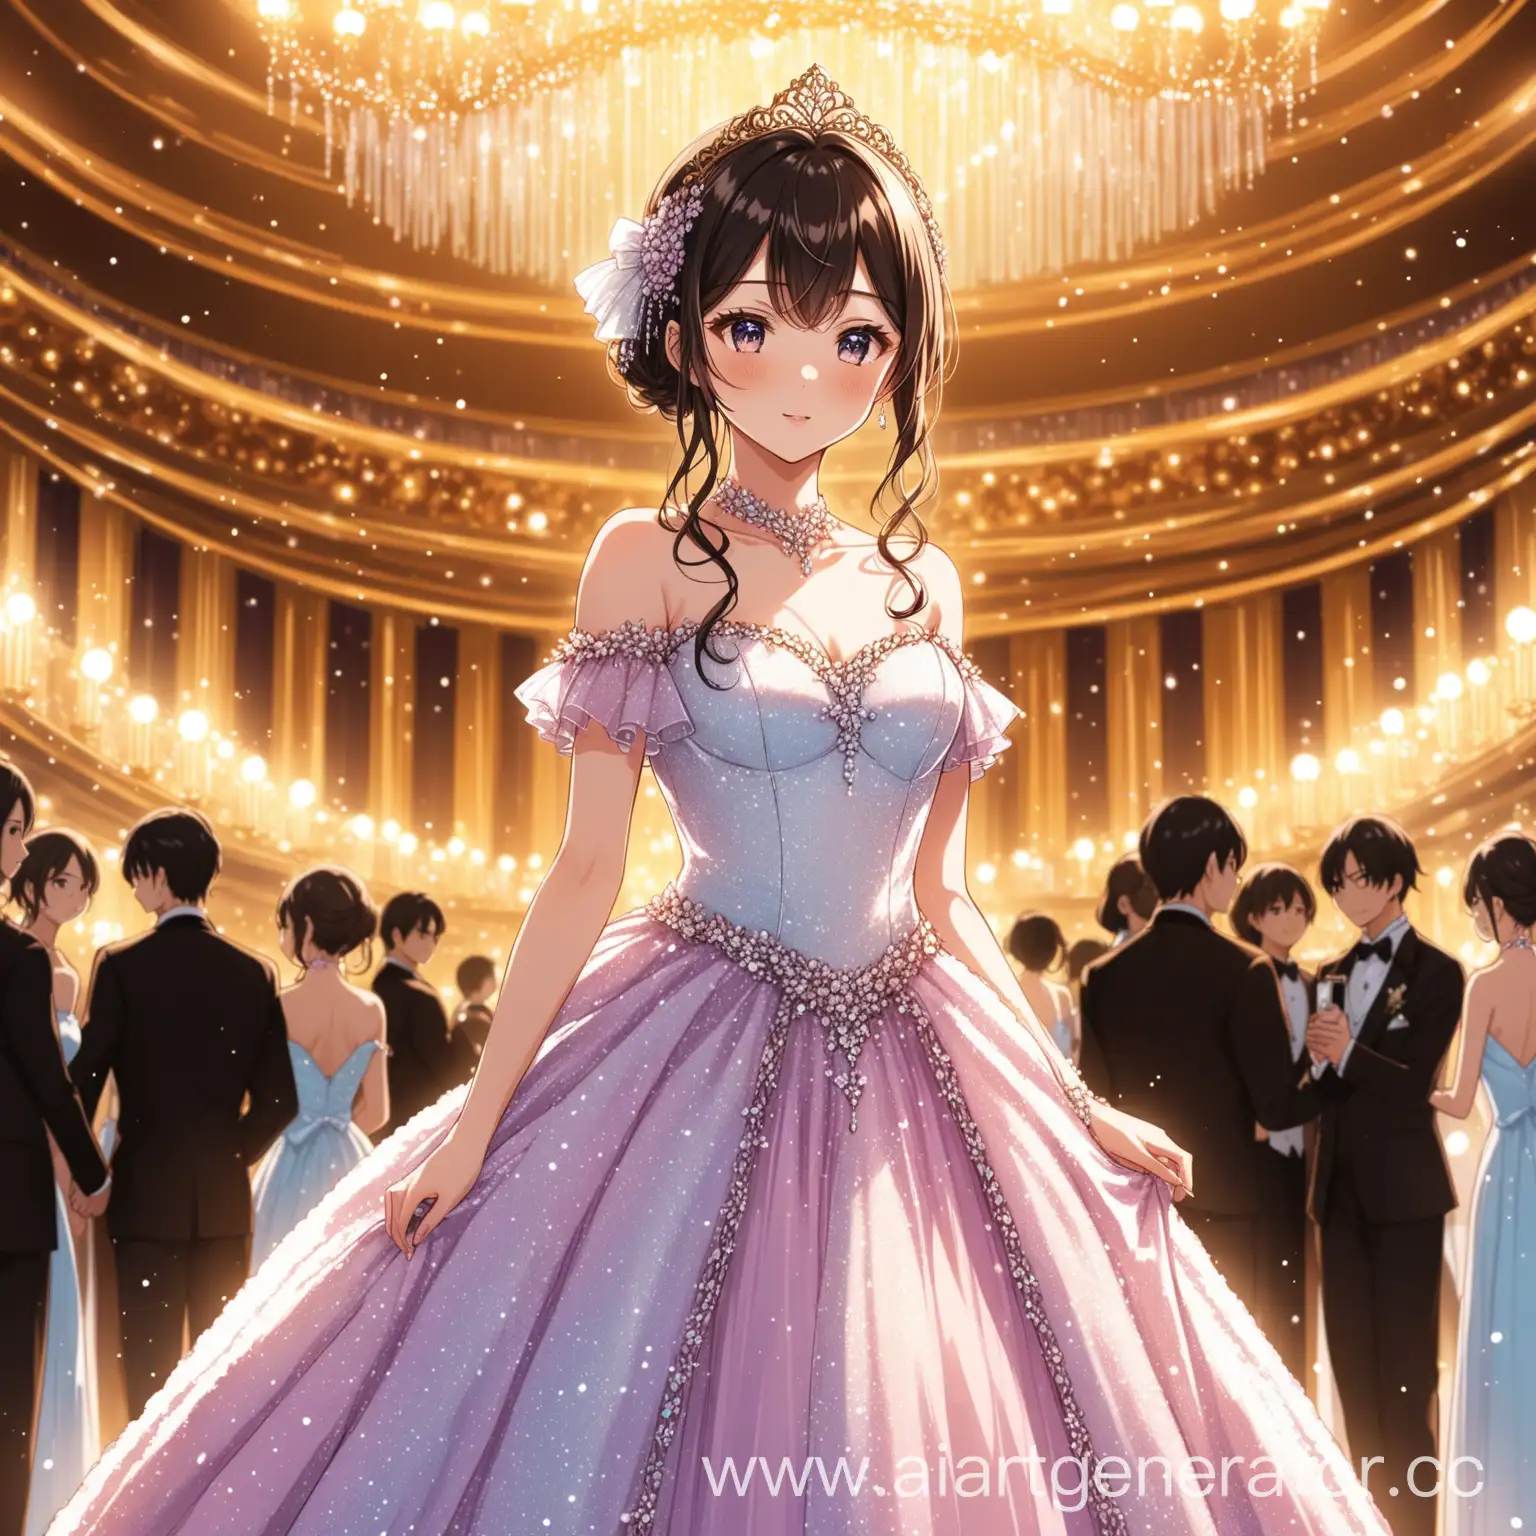 Elegant-Anime-Girl-in-Luxurious-Ballroom-Dress-Dancing-at-a-Lavish-Ball